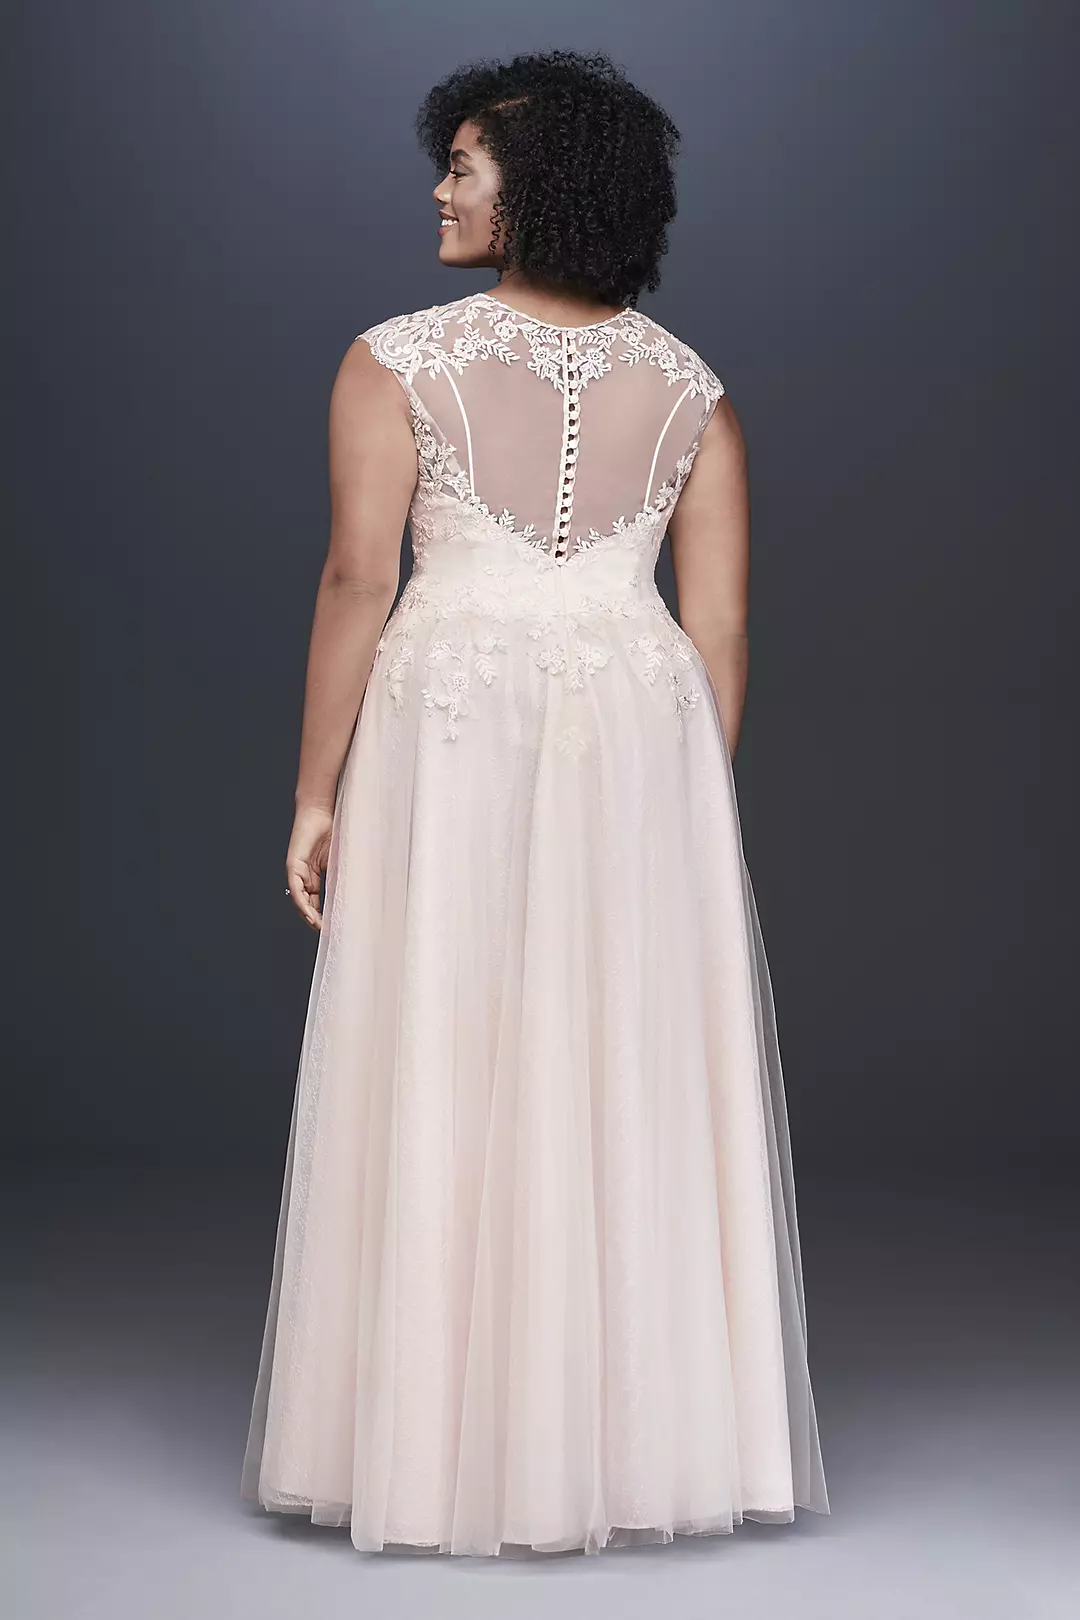 Tulle-Over-Lace V-Neck A-Line Wedding Dress Image 2